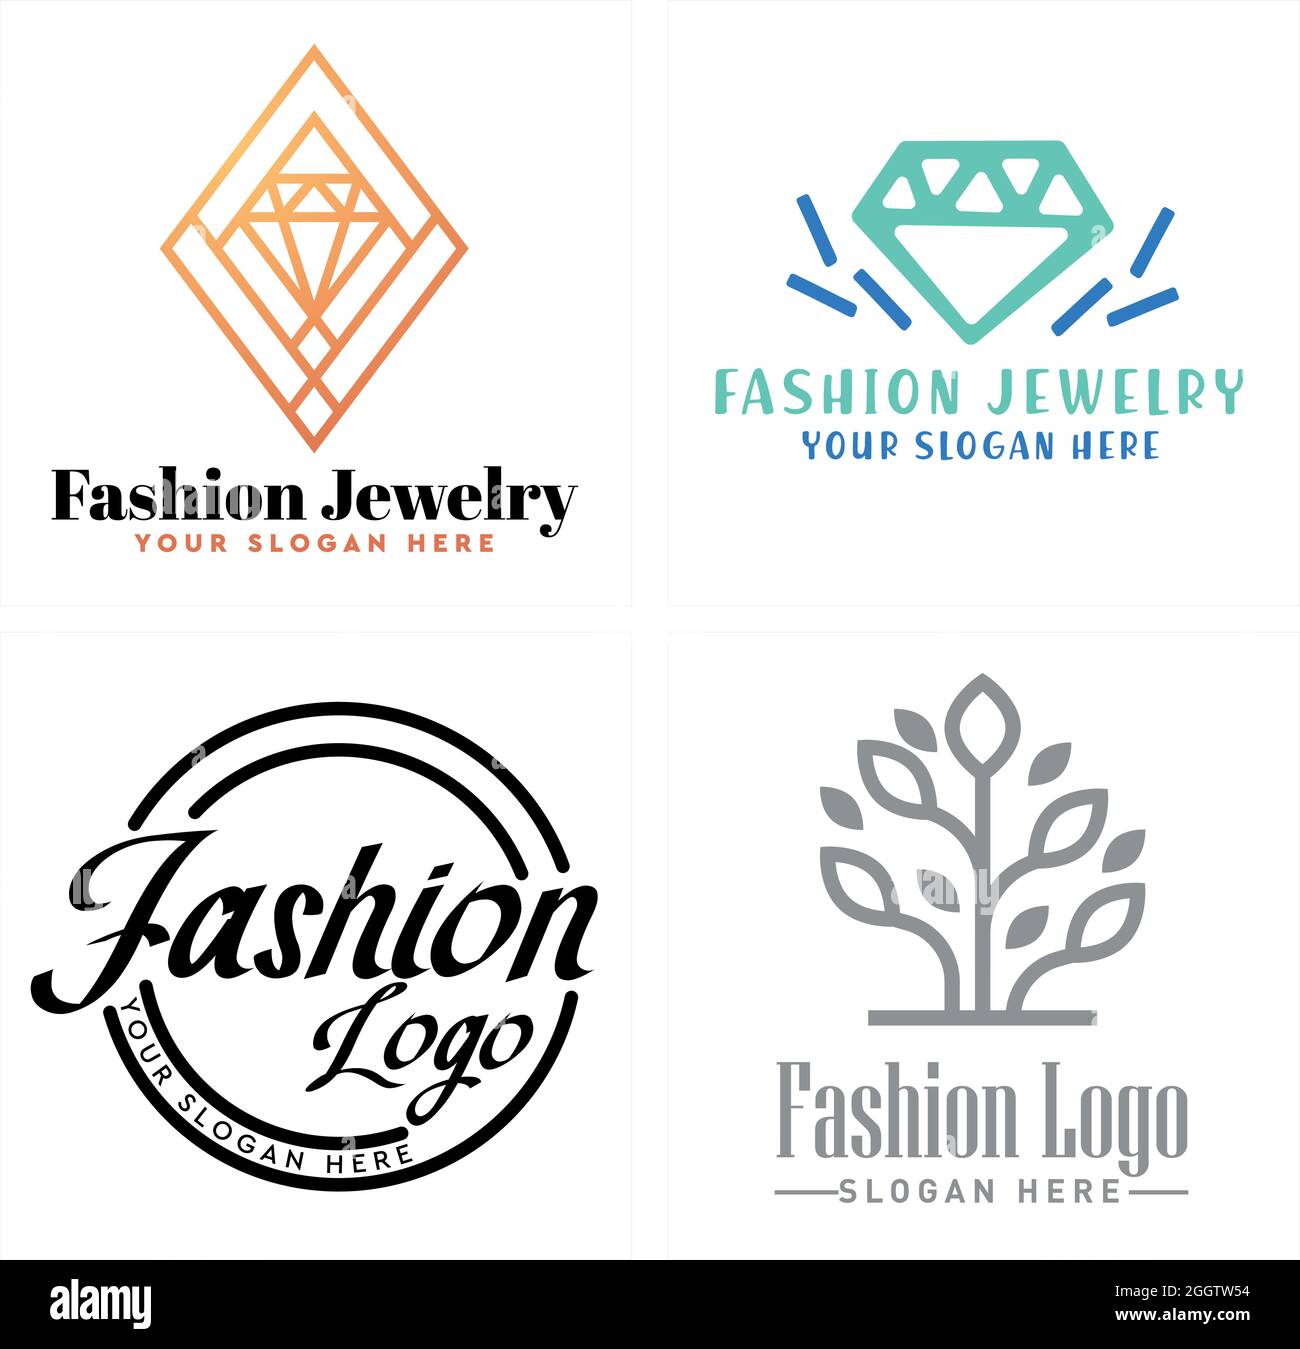 Fashion jewelry diamond business logo design Stock Vector Image & Art ...